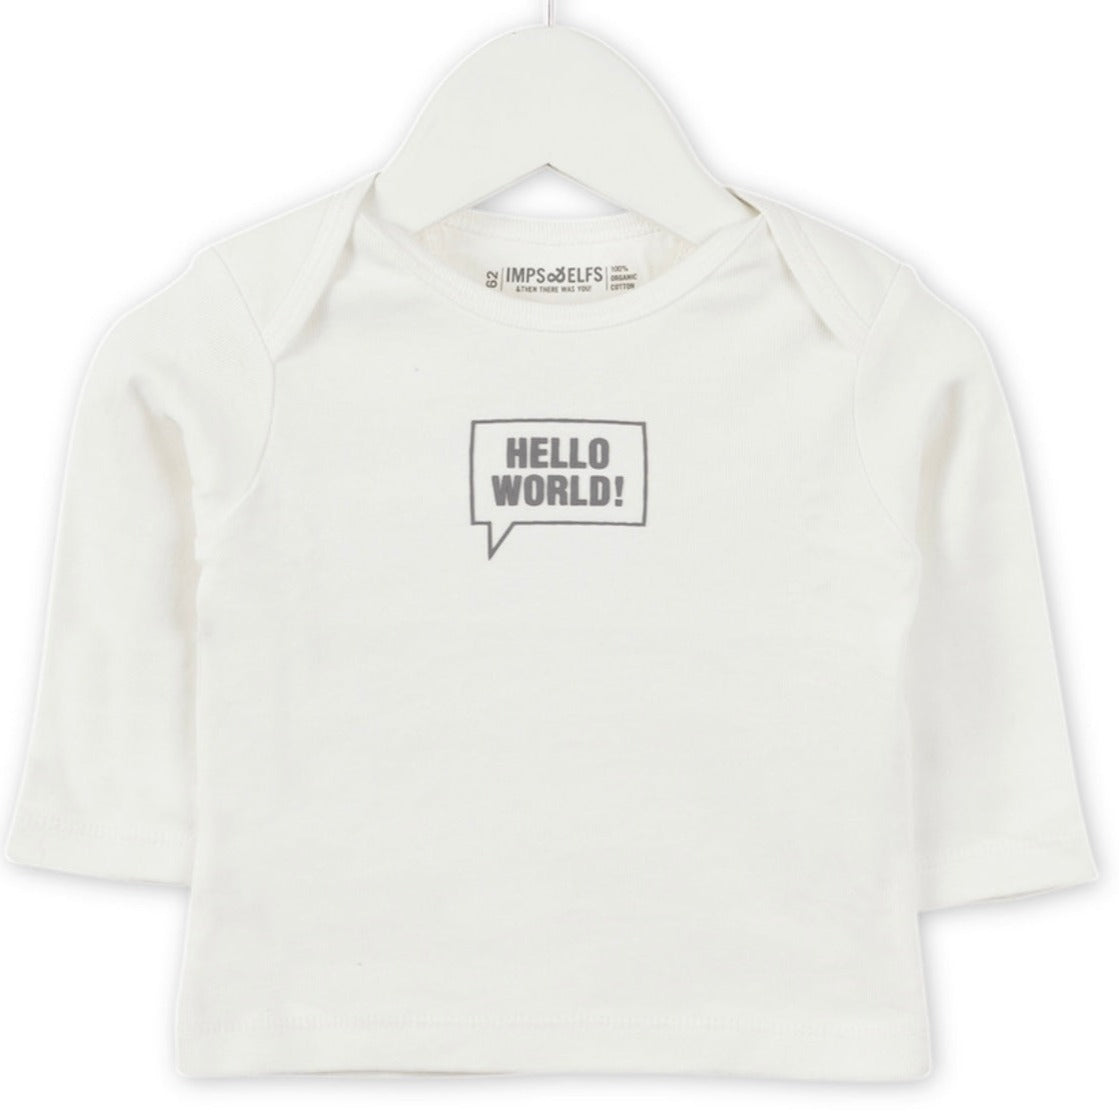 Imps & Elfs Long Sleeve Certified Organic Cotton T-Shirt Sweatshirt With Cute Logos for Mini Girls and Boys 0-9M - CapuletKids